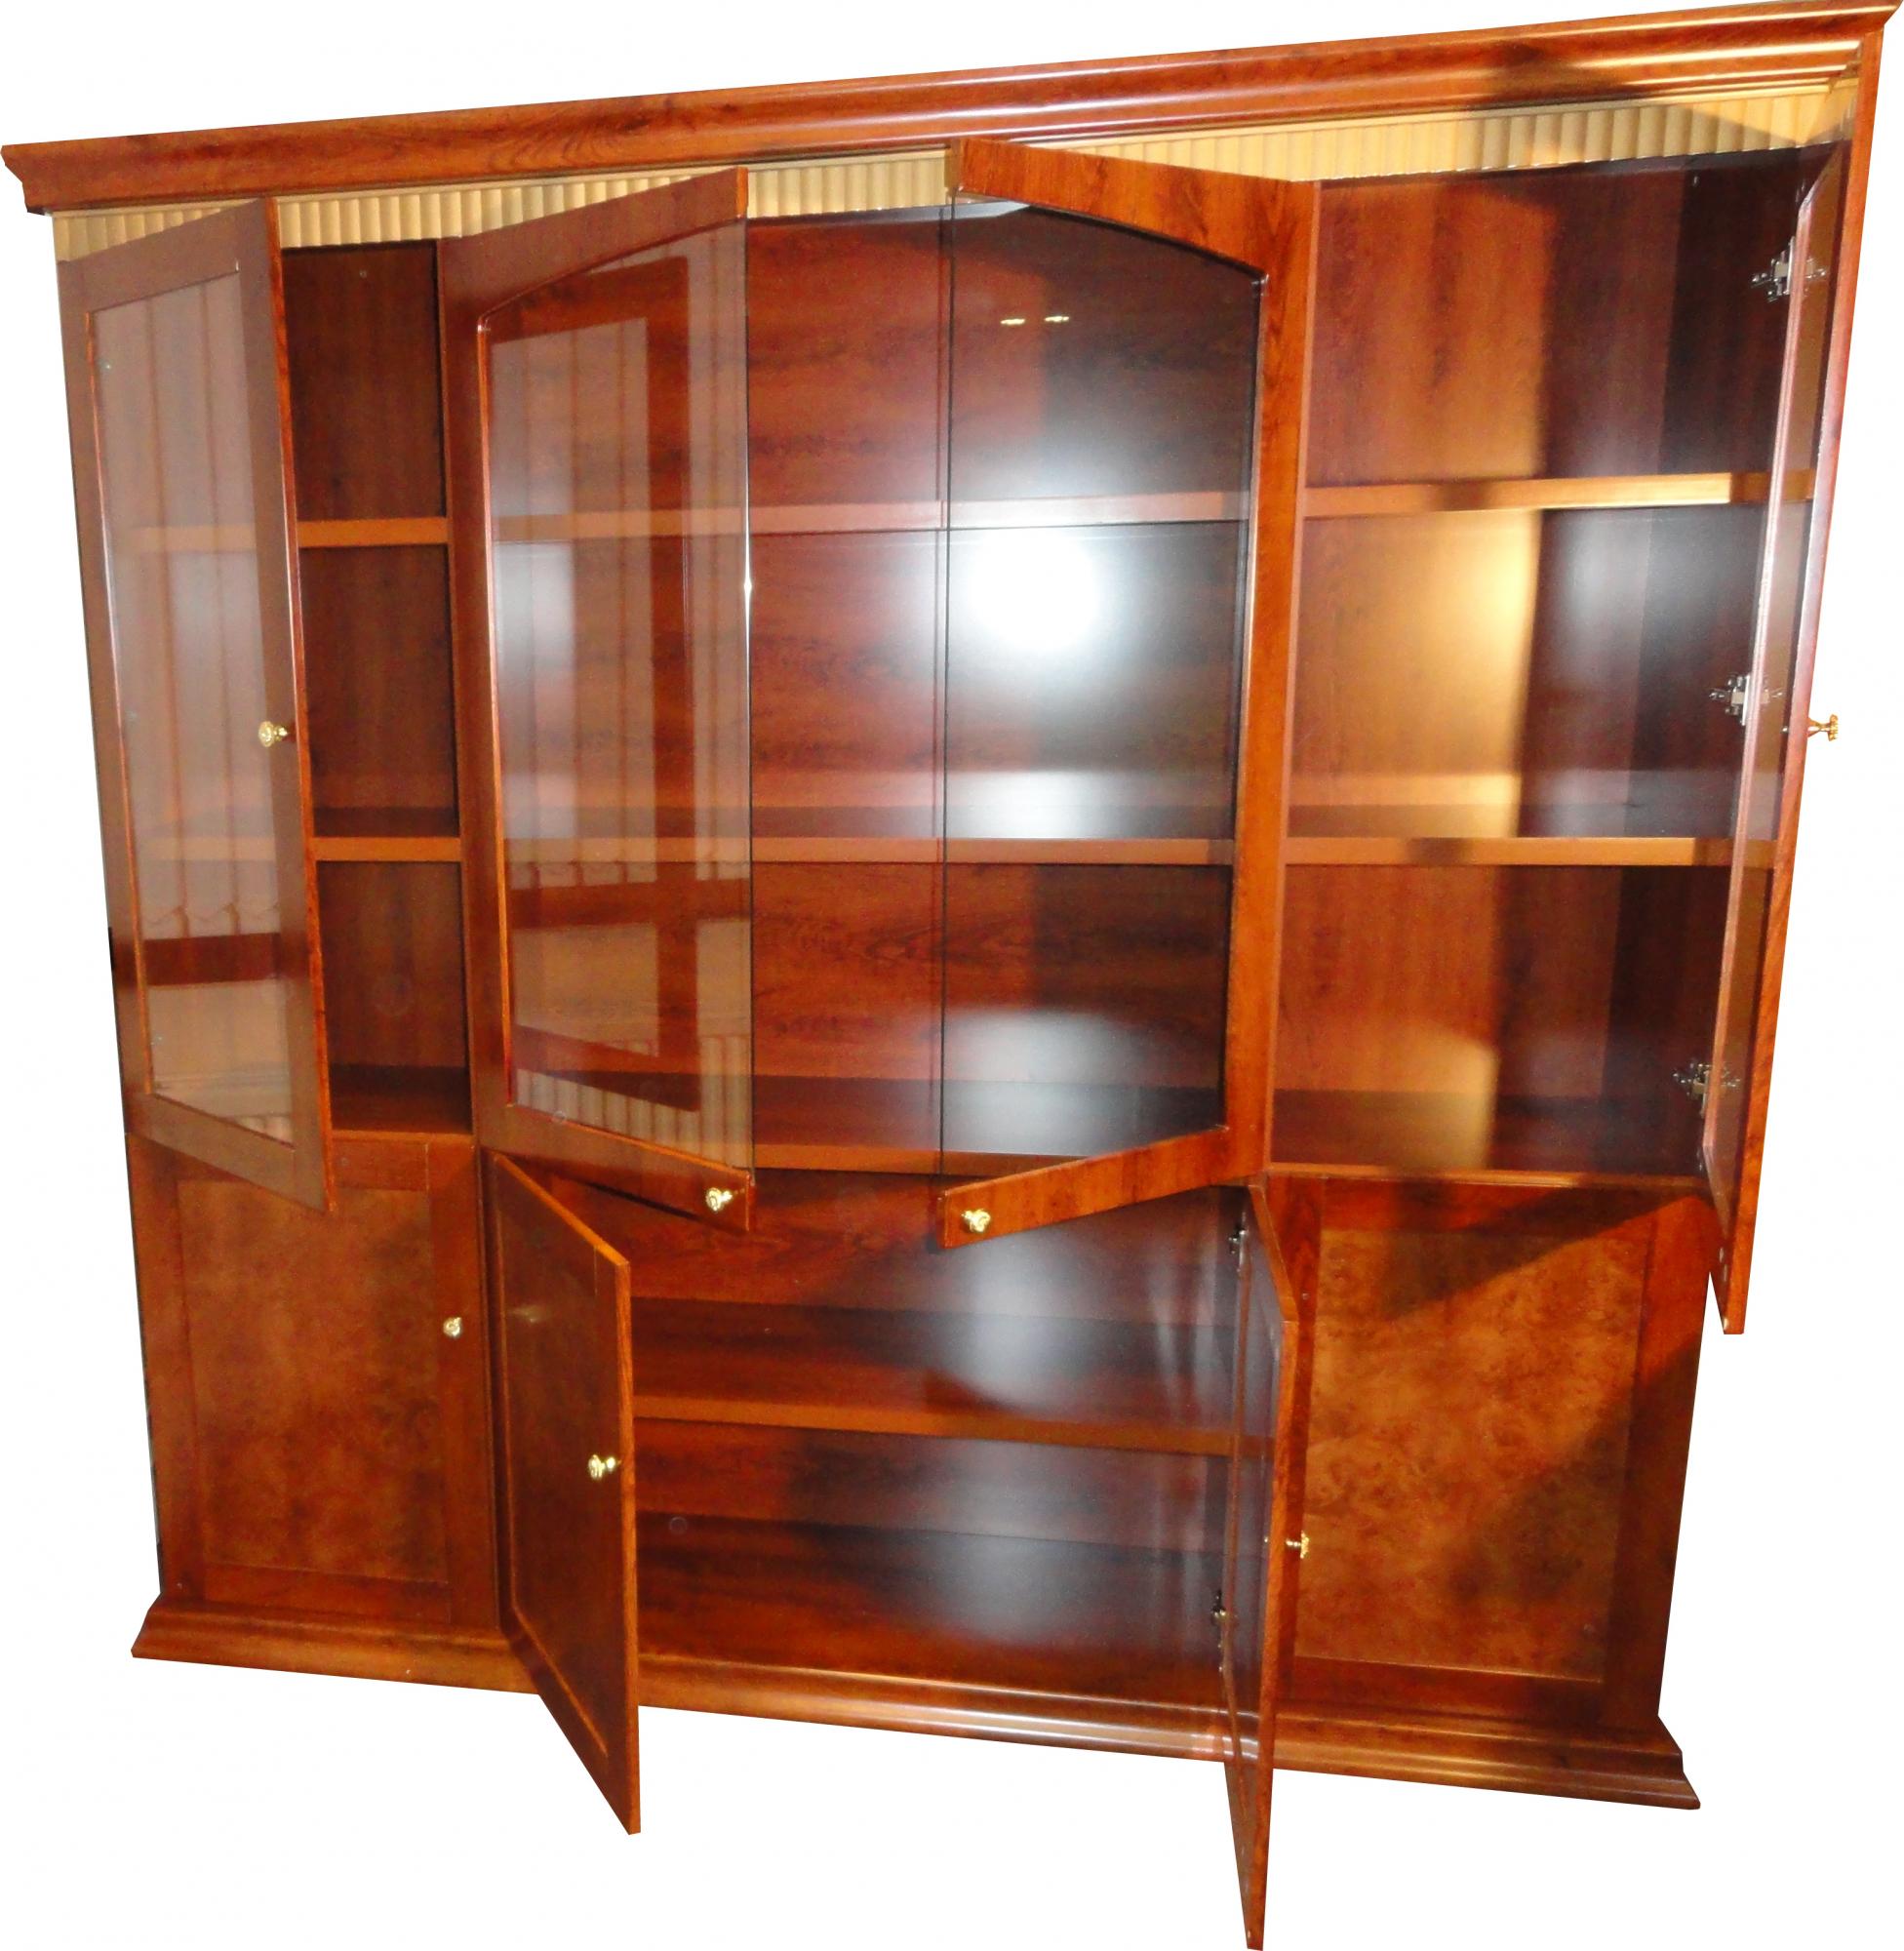 Medium Oak Luxury Bookcase 4 Doors Wide - 1861A-4DR